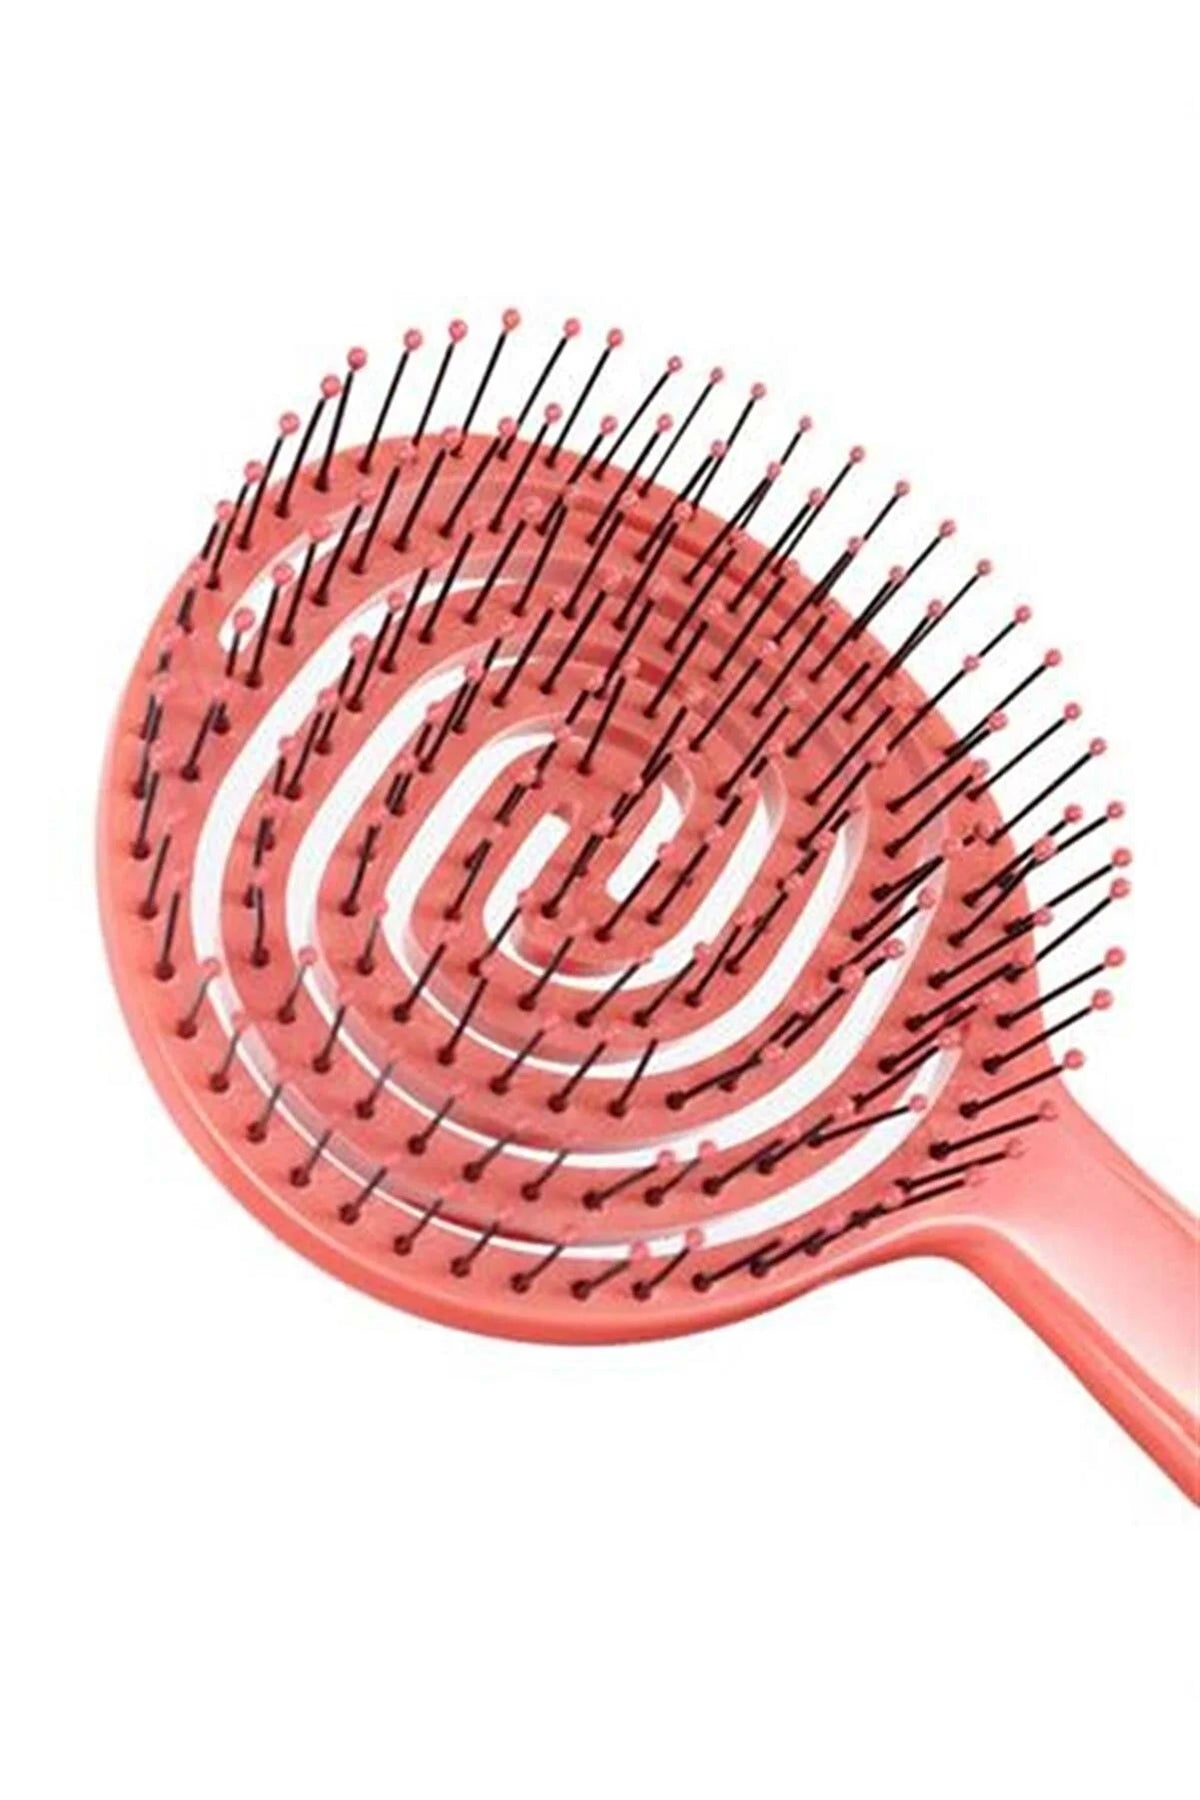 Nascita Pro 3D Oval Hair Brush hair brush Volare Makeup   